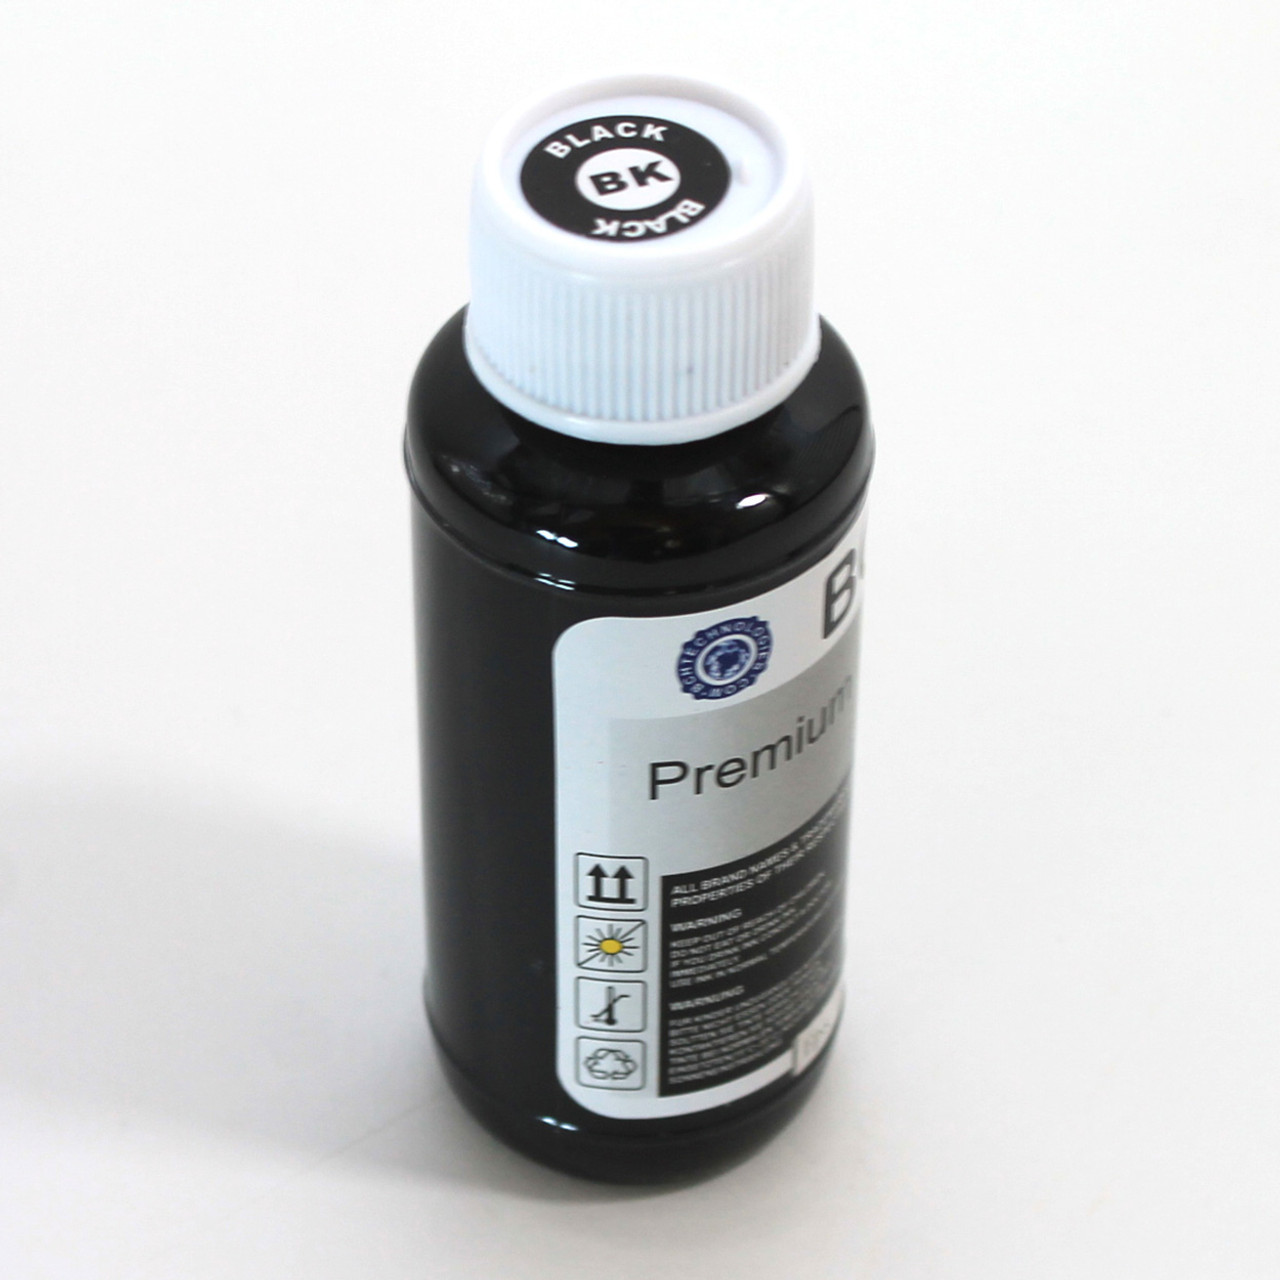 BNIK Permanent Black Ink Refill 100ml - InfamyArt